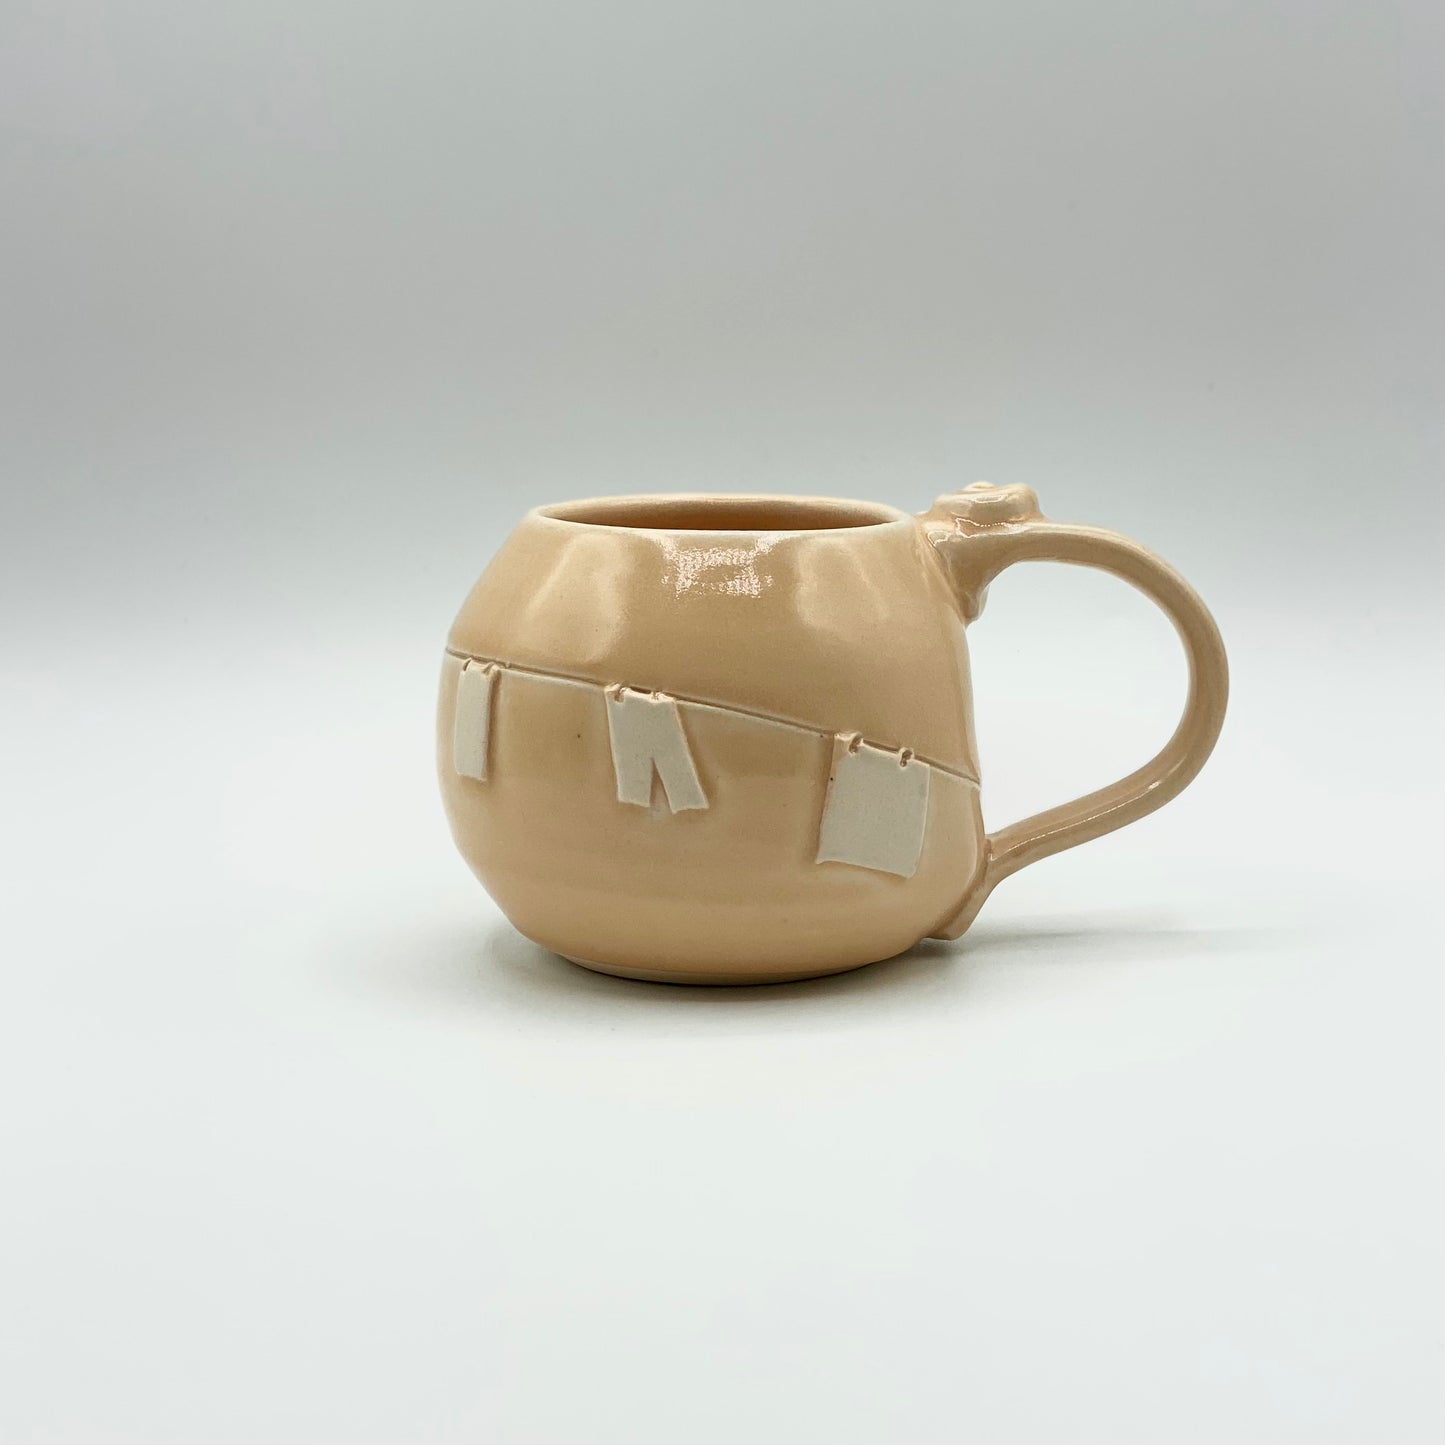 Clothesline Mug by Ginette Arsenault